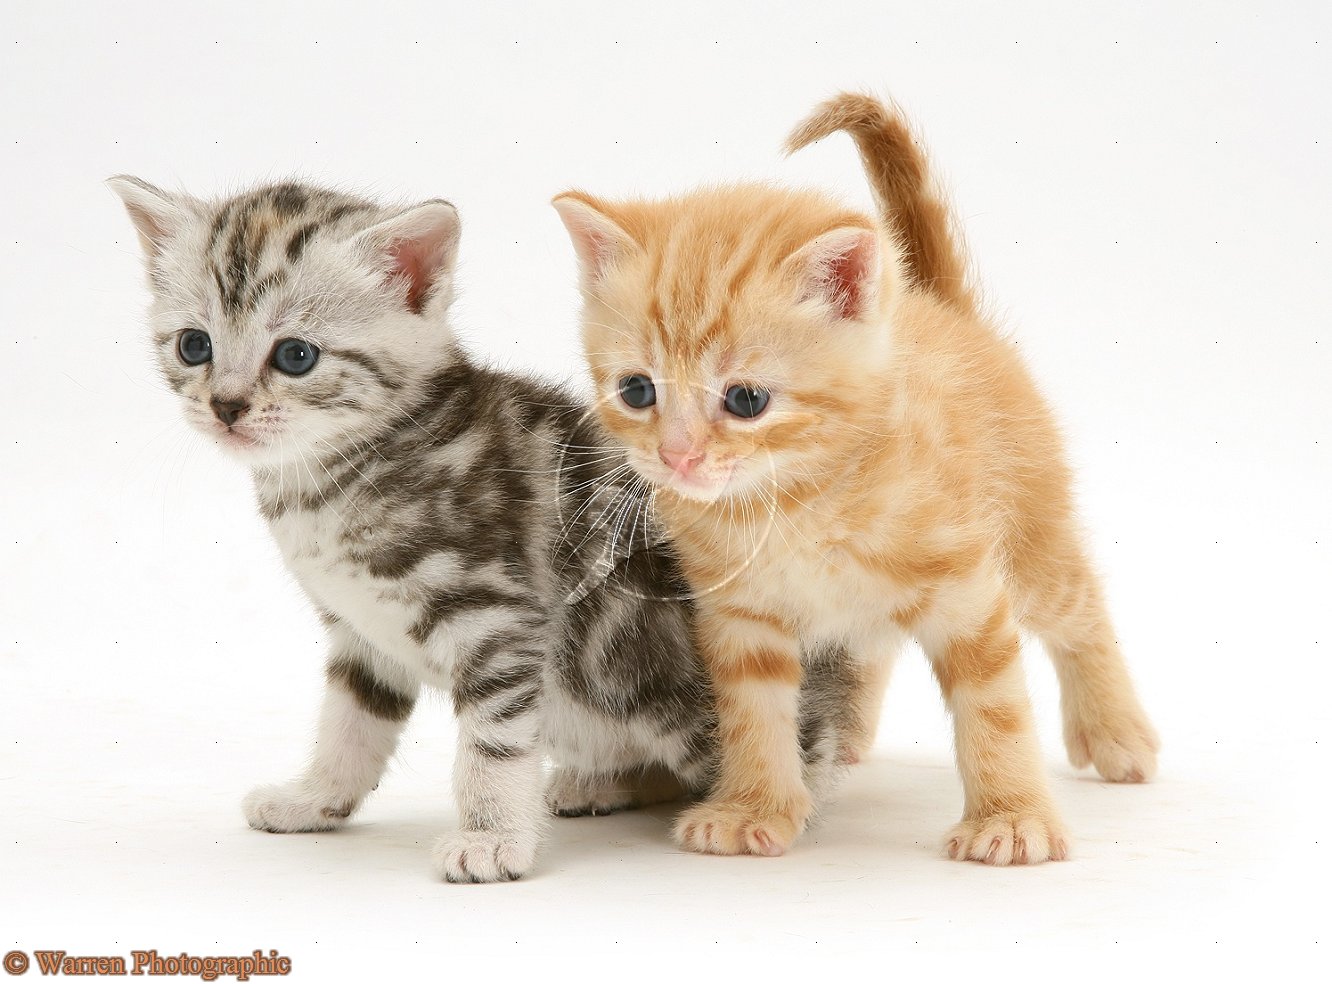 kittens by warren photgraphic